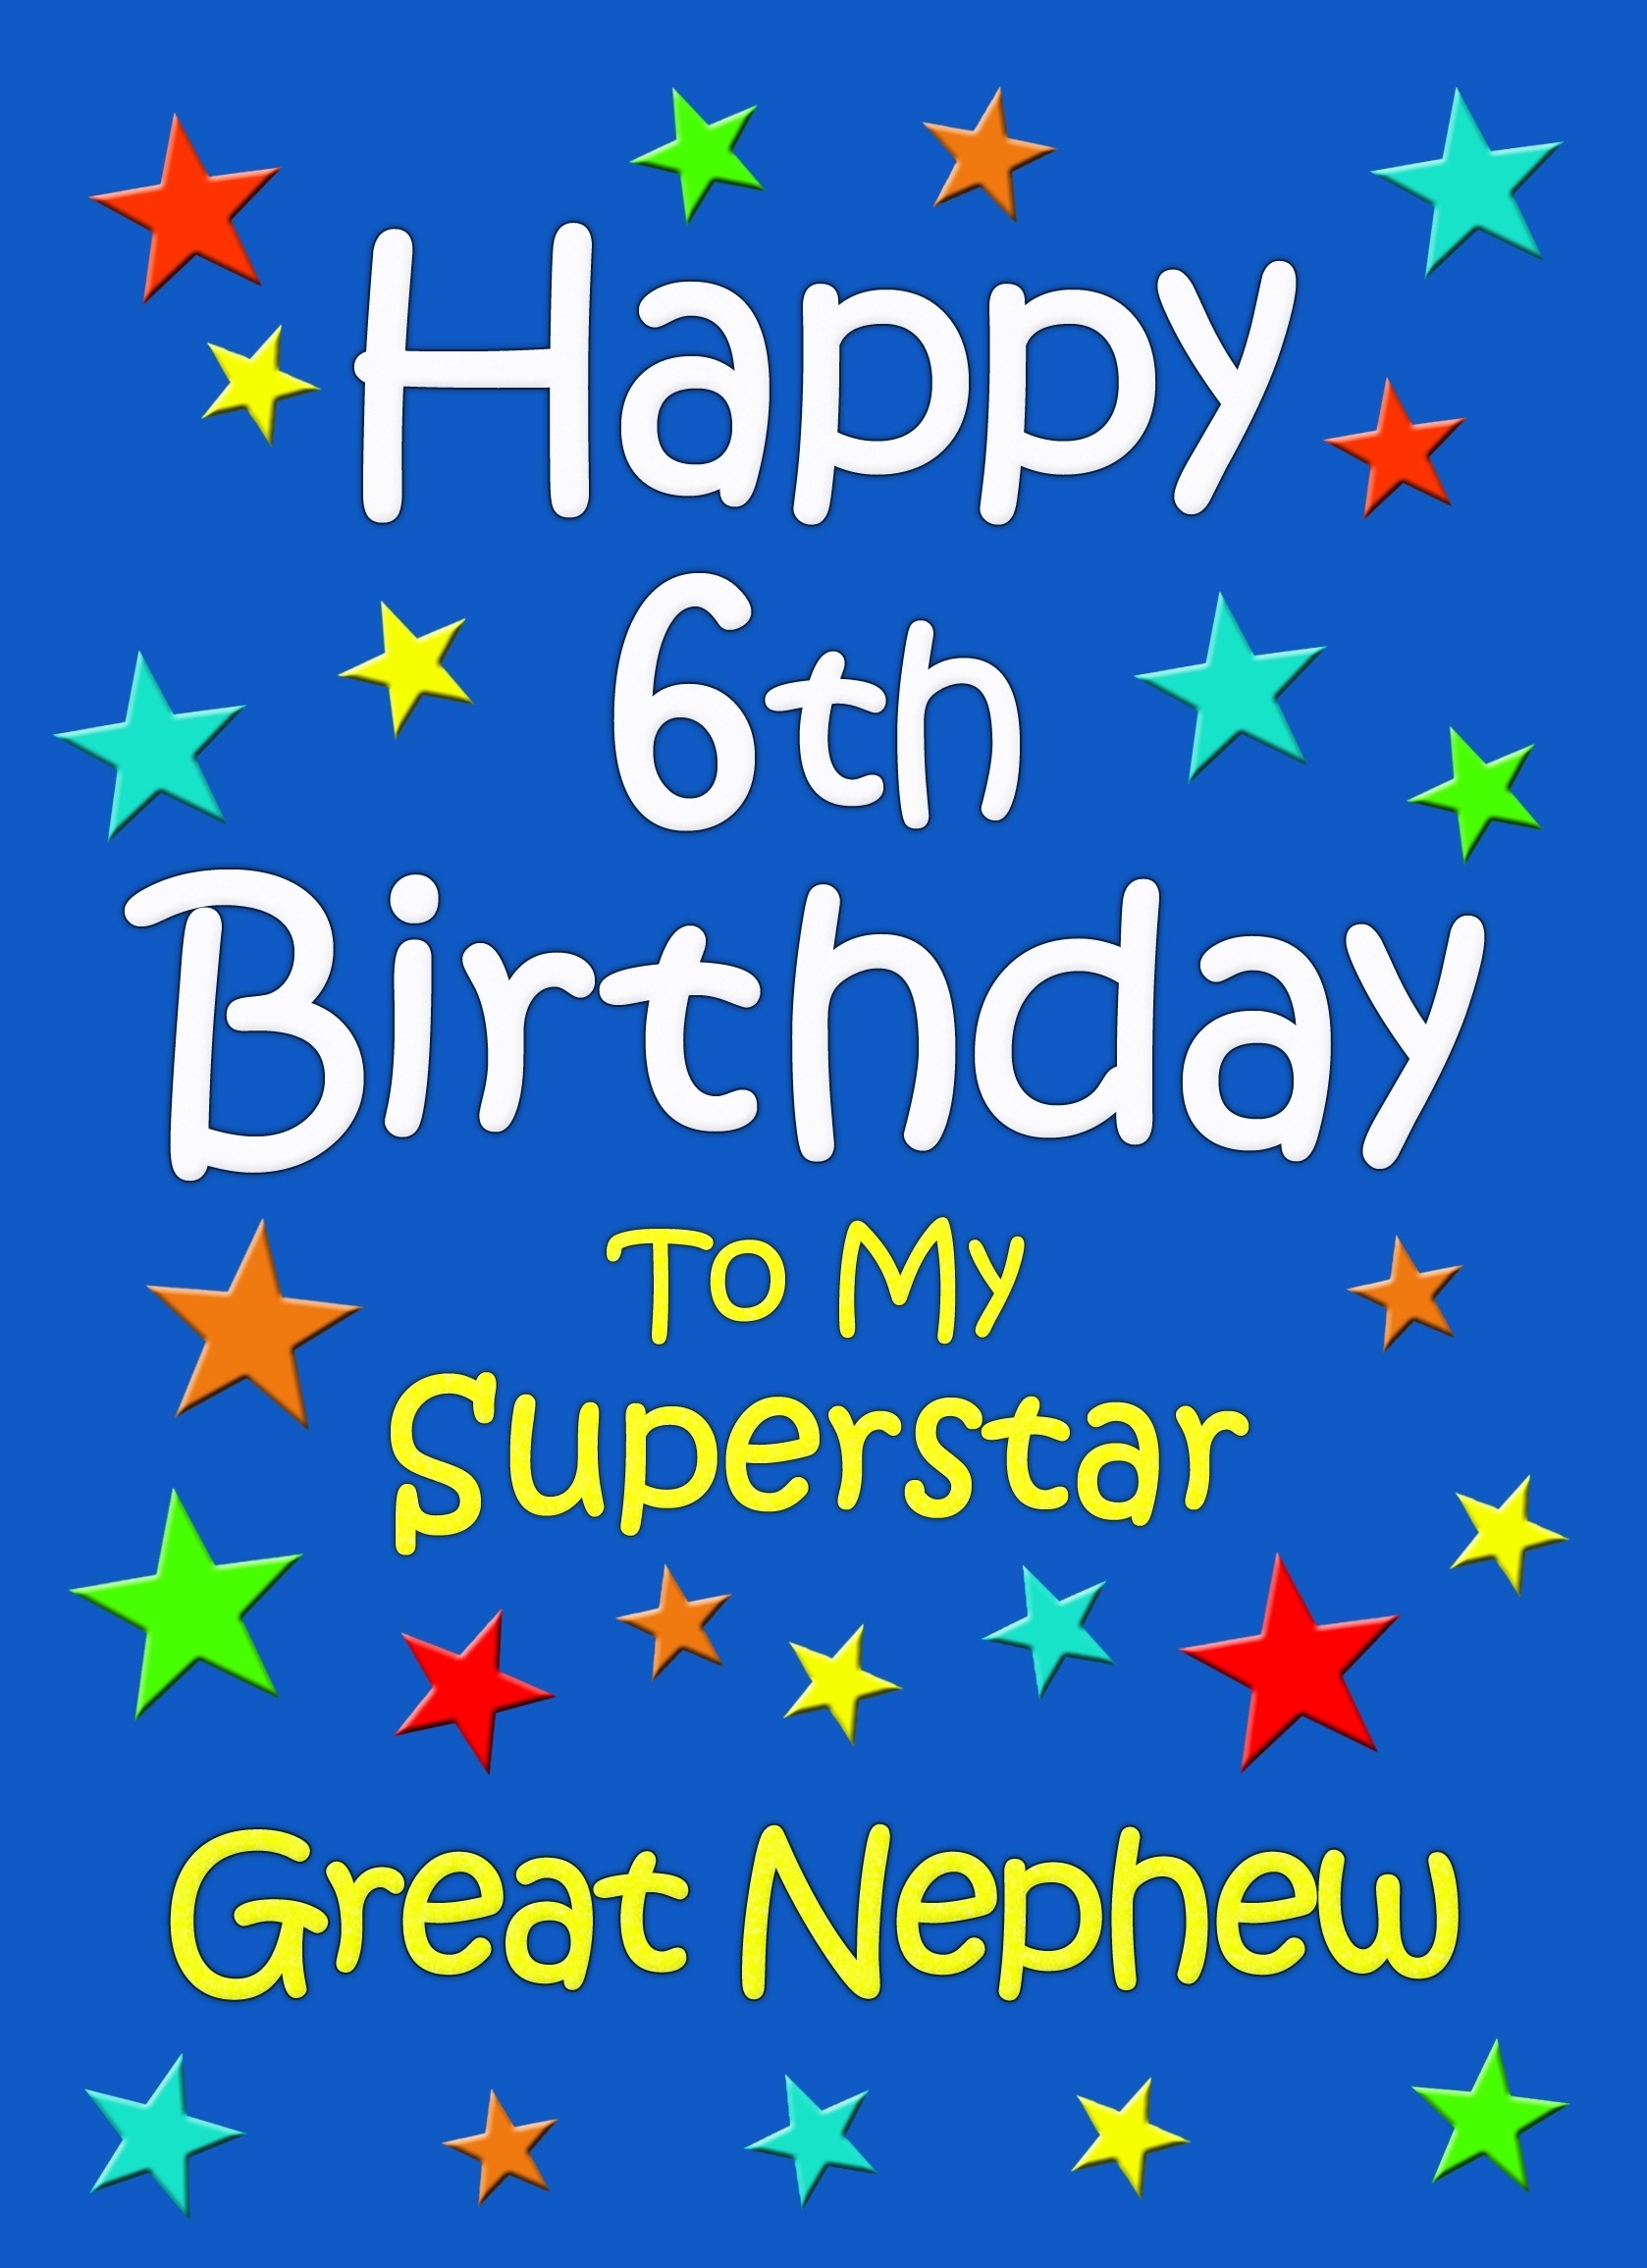 Great Nephew 6th Birthday Card (Blue)